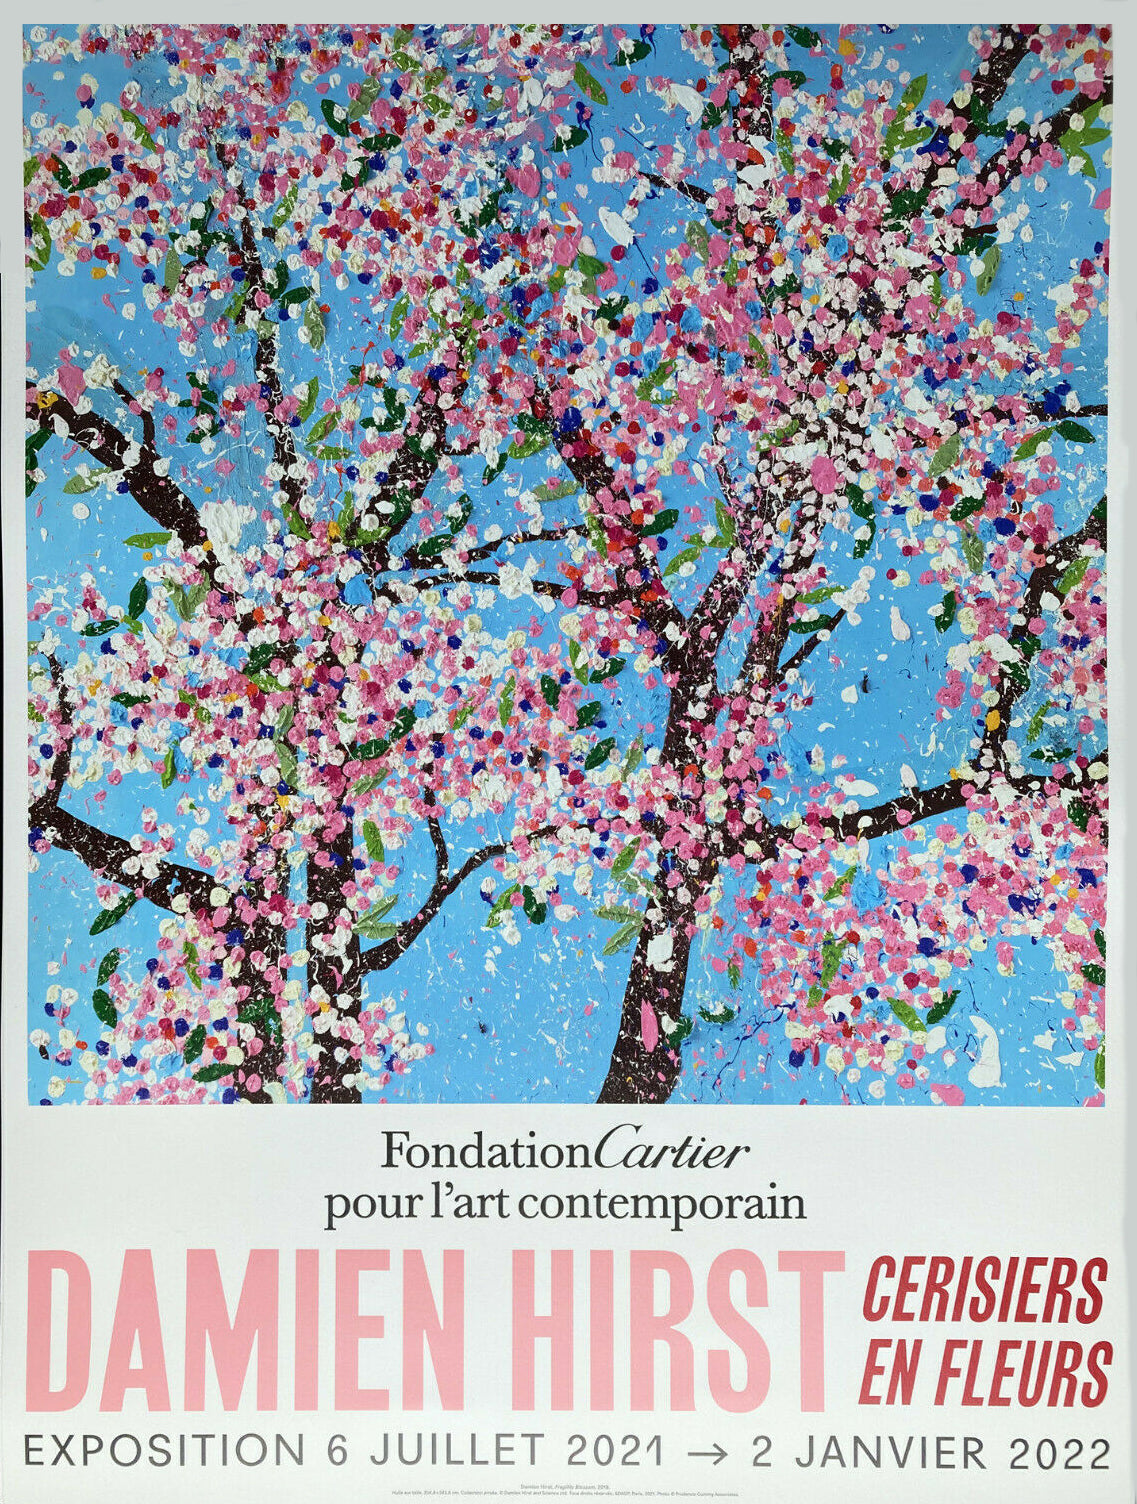 Damien Hirst - Cherry Blossom - Fondation Cartier Paris ©, Manifesto originale della mostra 2/6